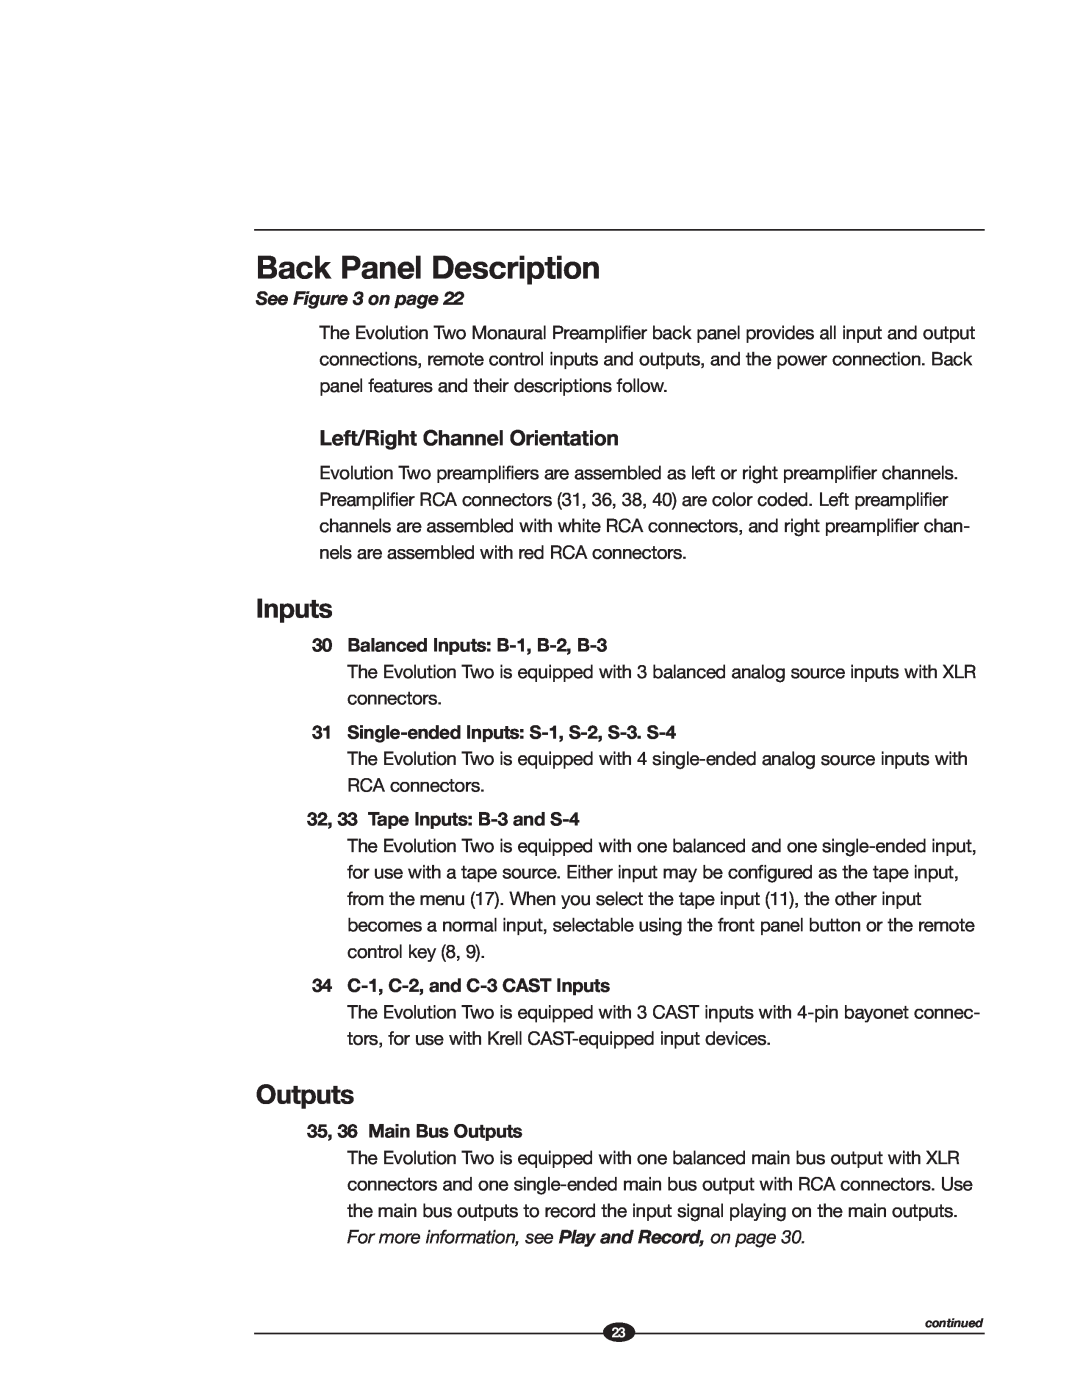 Krell Industries EVOLUTION TWO MONAURAL PREAMPLIFIER manual Back Panel Description, Inputs, Outputs 